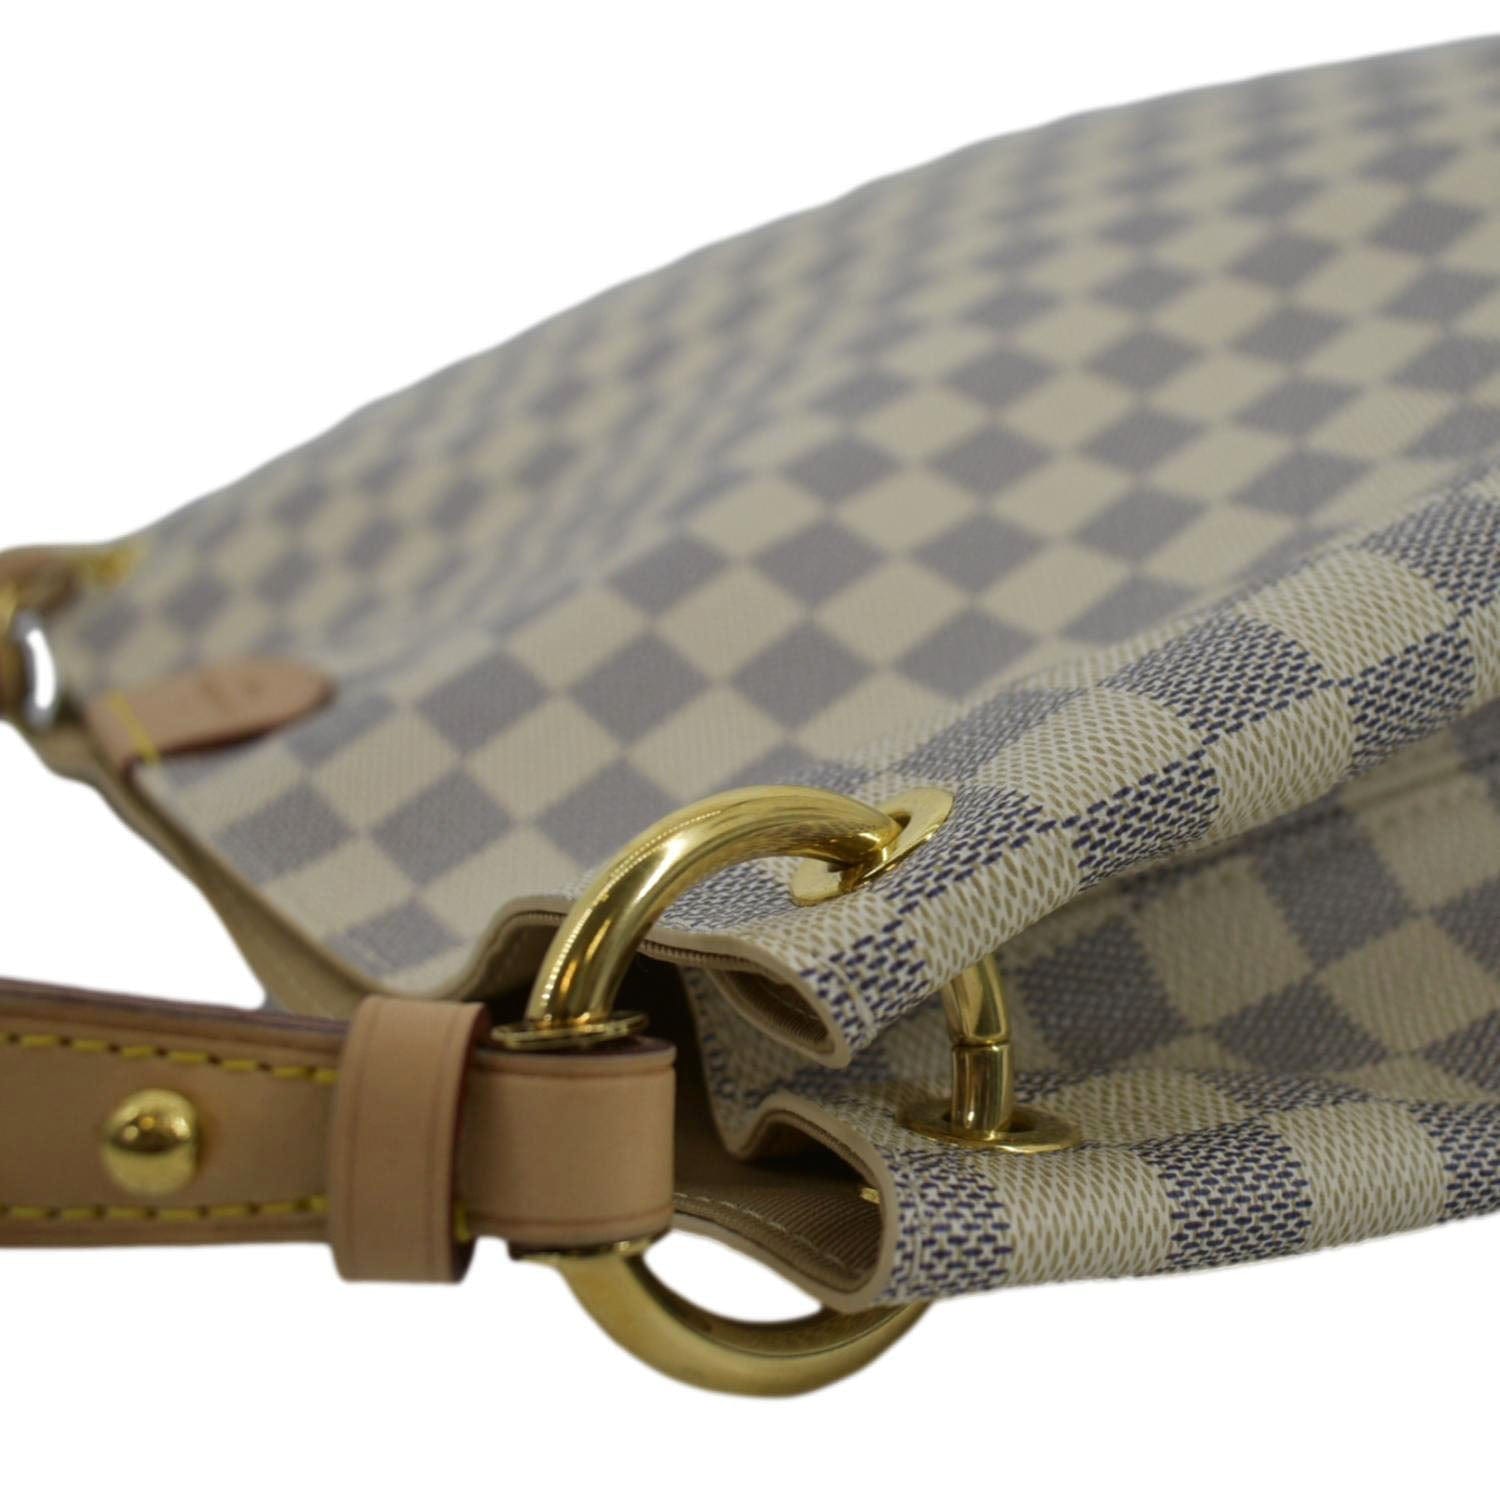 USED Louis Vuitton Damier Azur Graceful PM Hobo Shoulder Bag